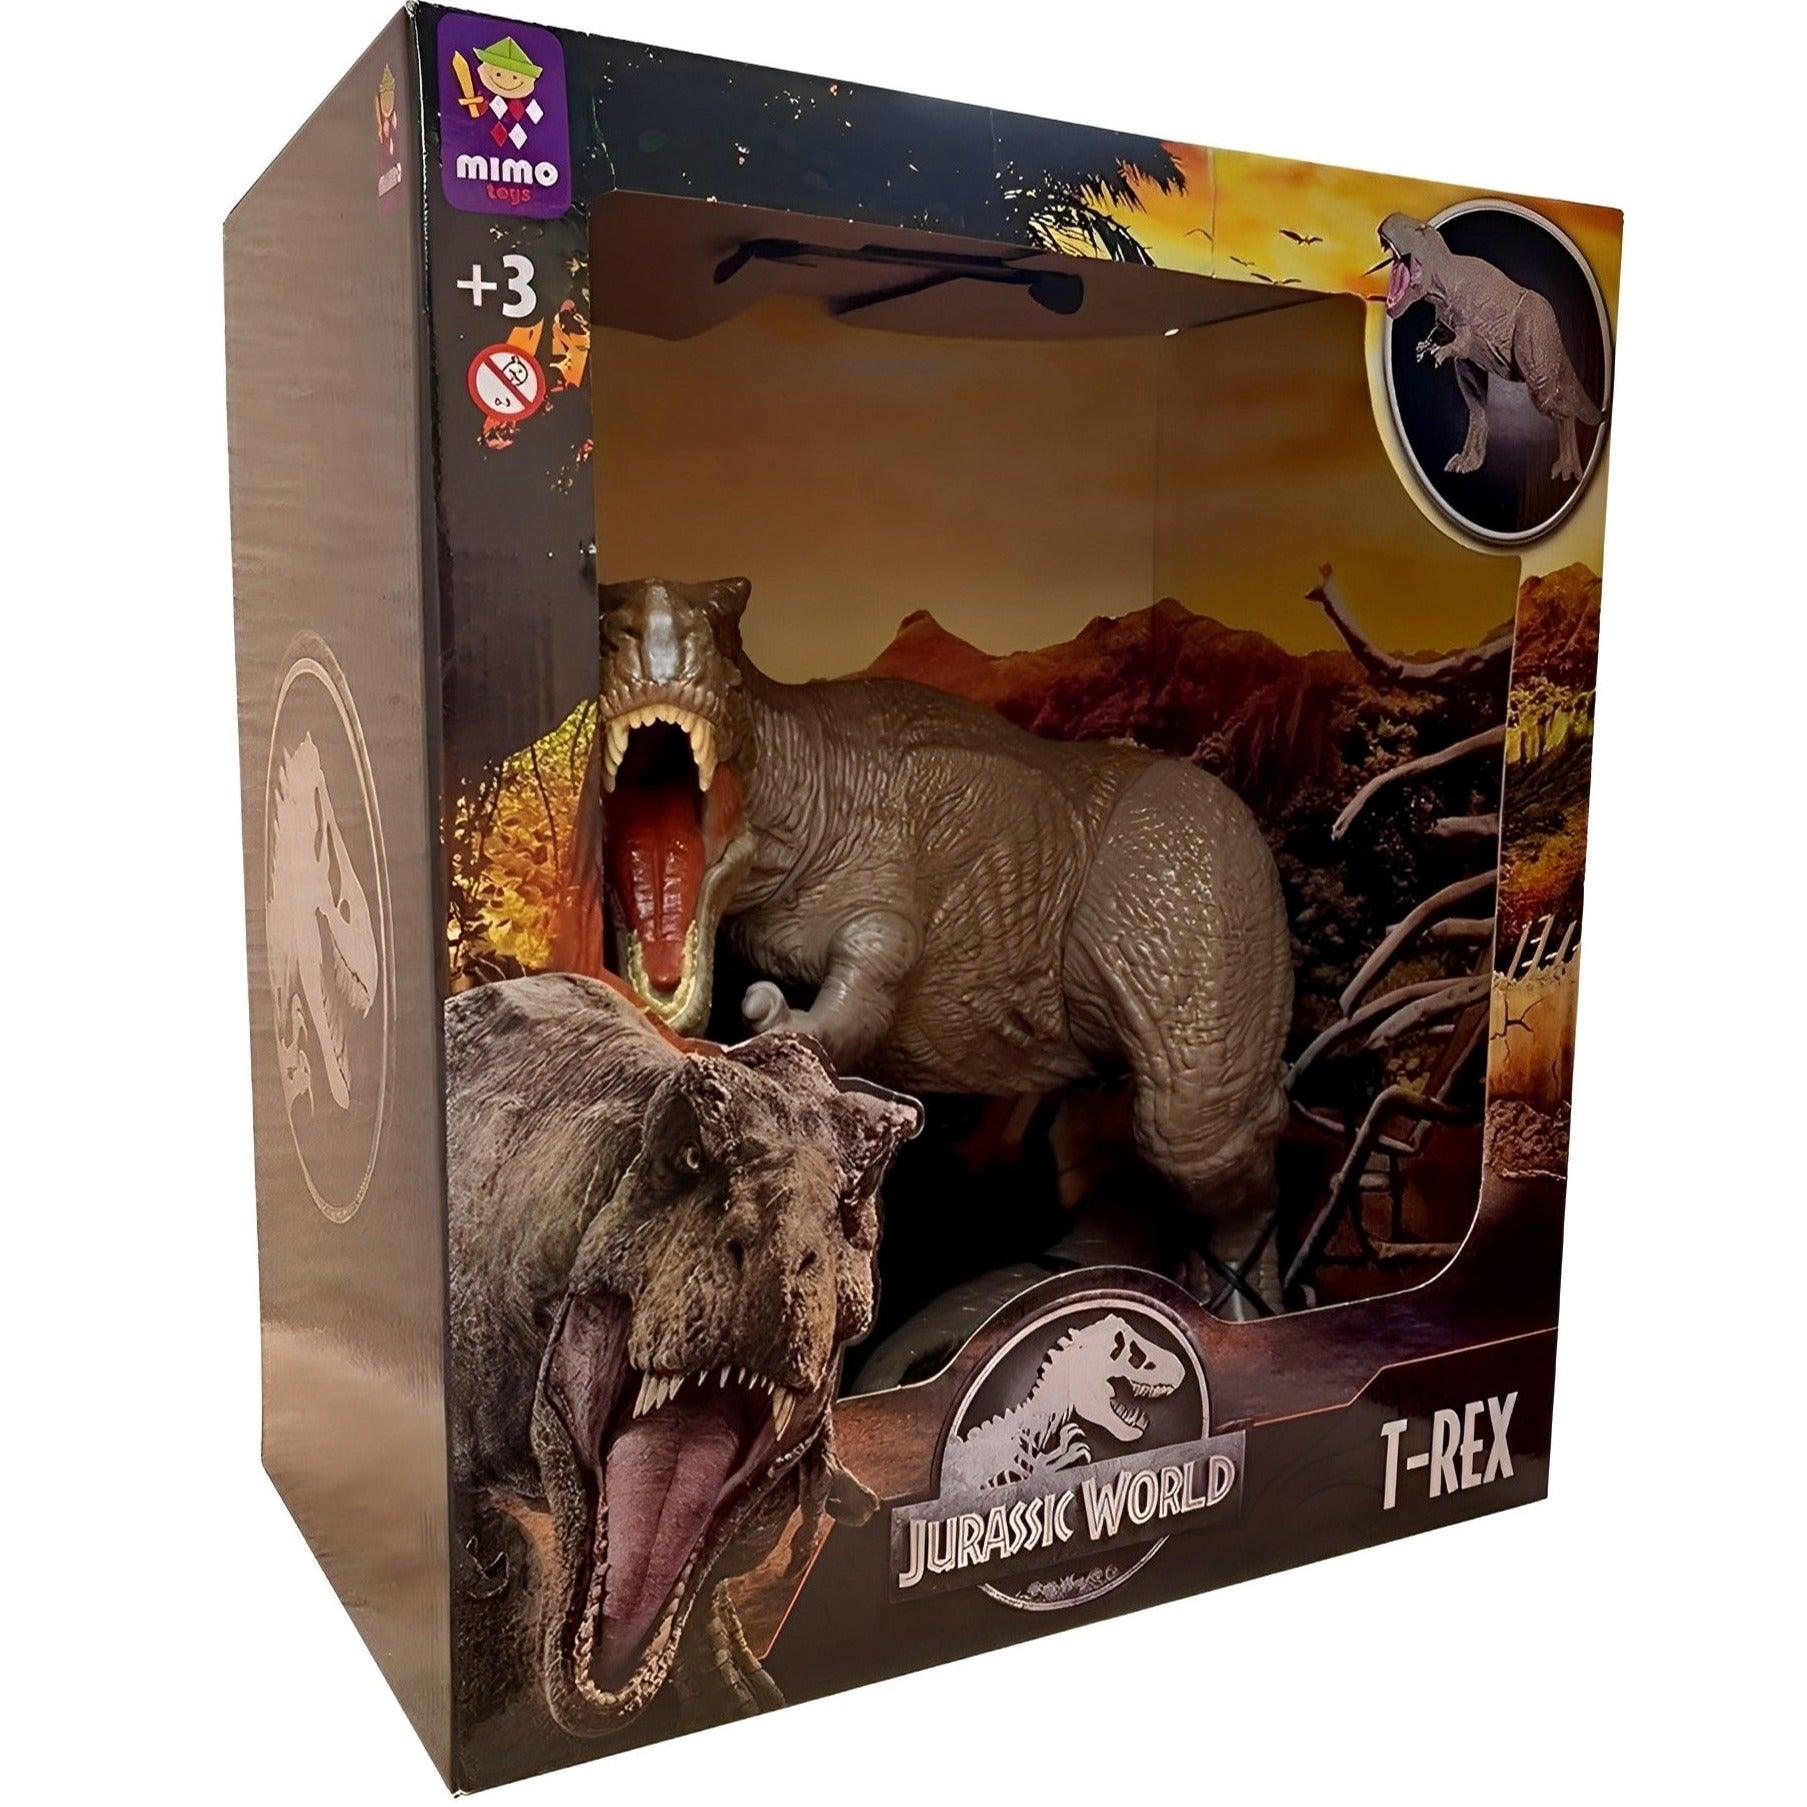 Jurassic World T-Rex Articulated Figure - Mimo Toys - Brazilian Shop